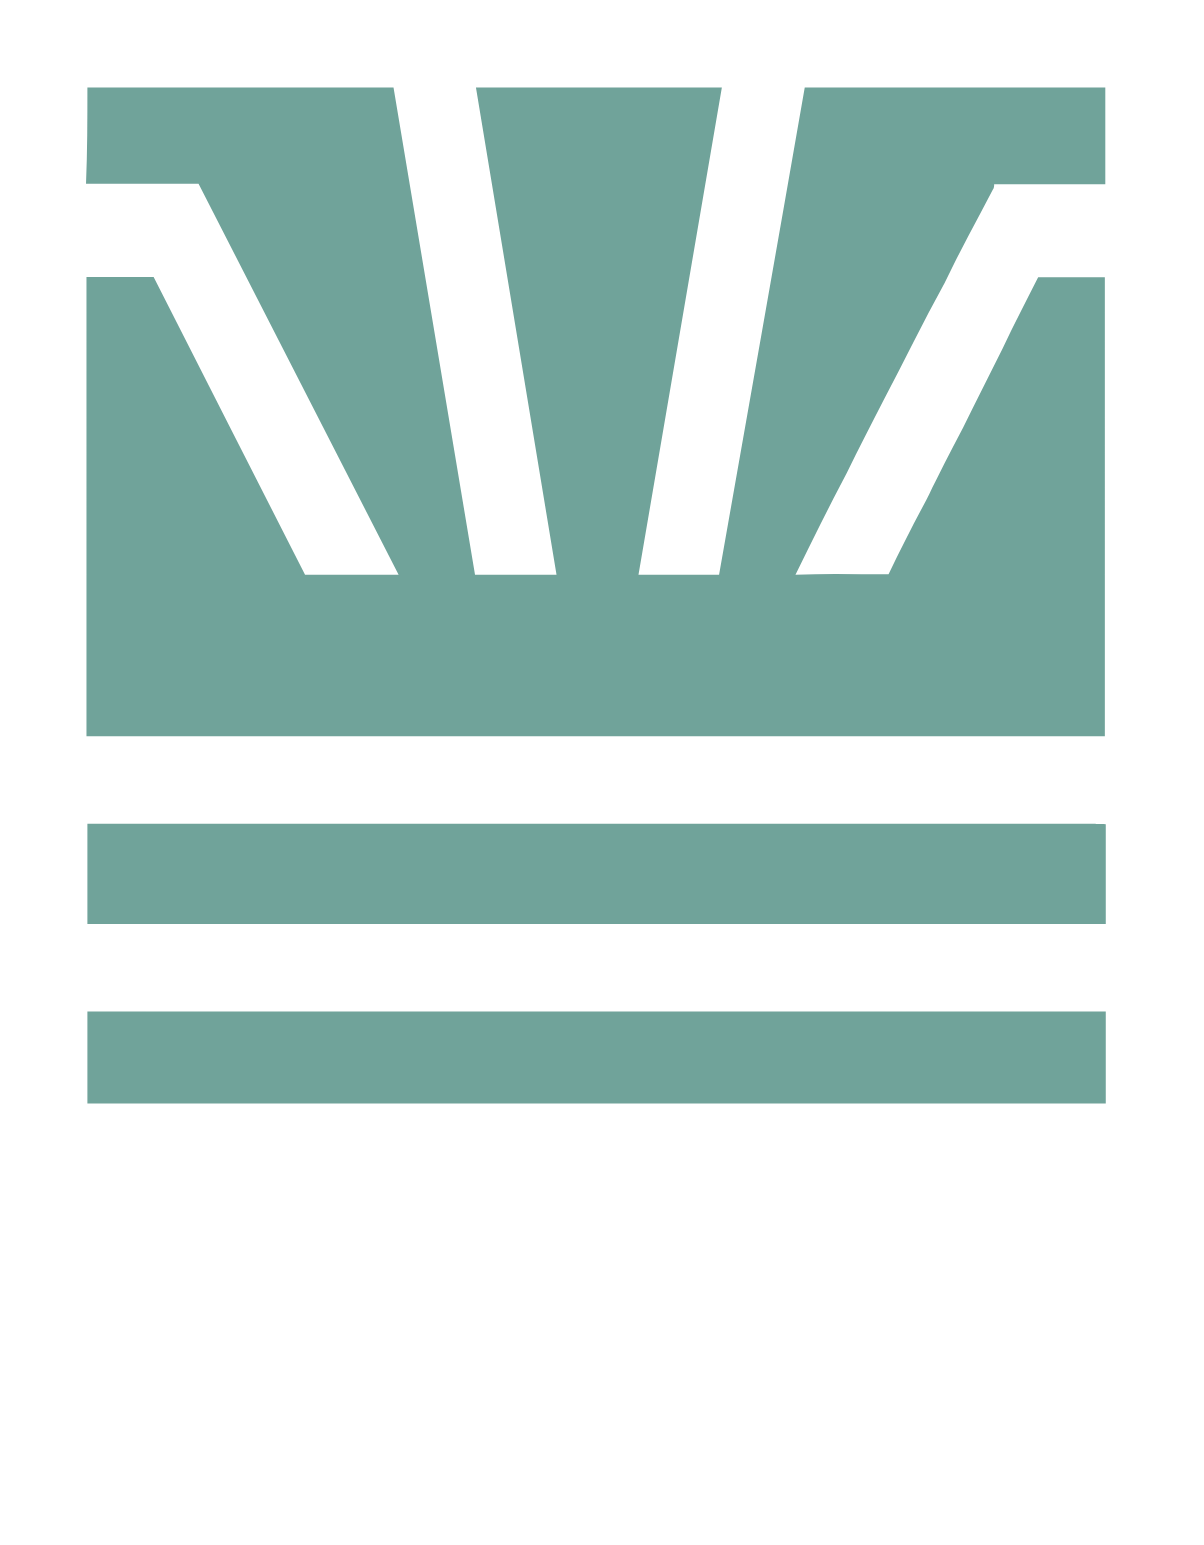 IRSA Inversiones y Representaciones logo large for dark backgrounds (transparent PNG)